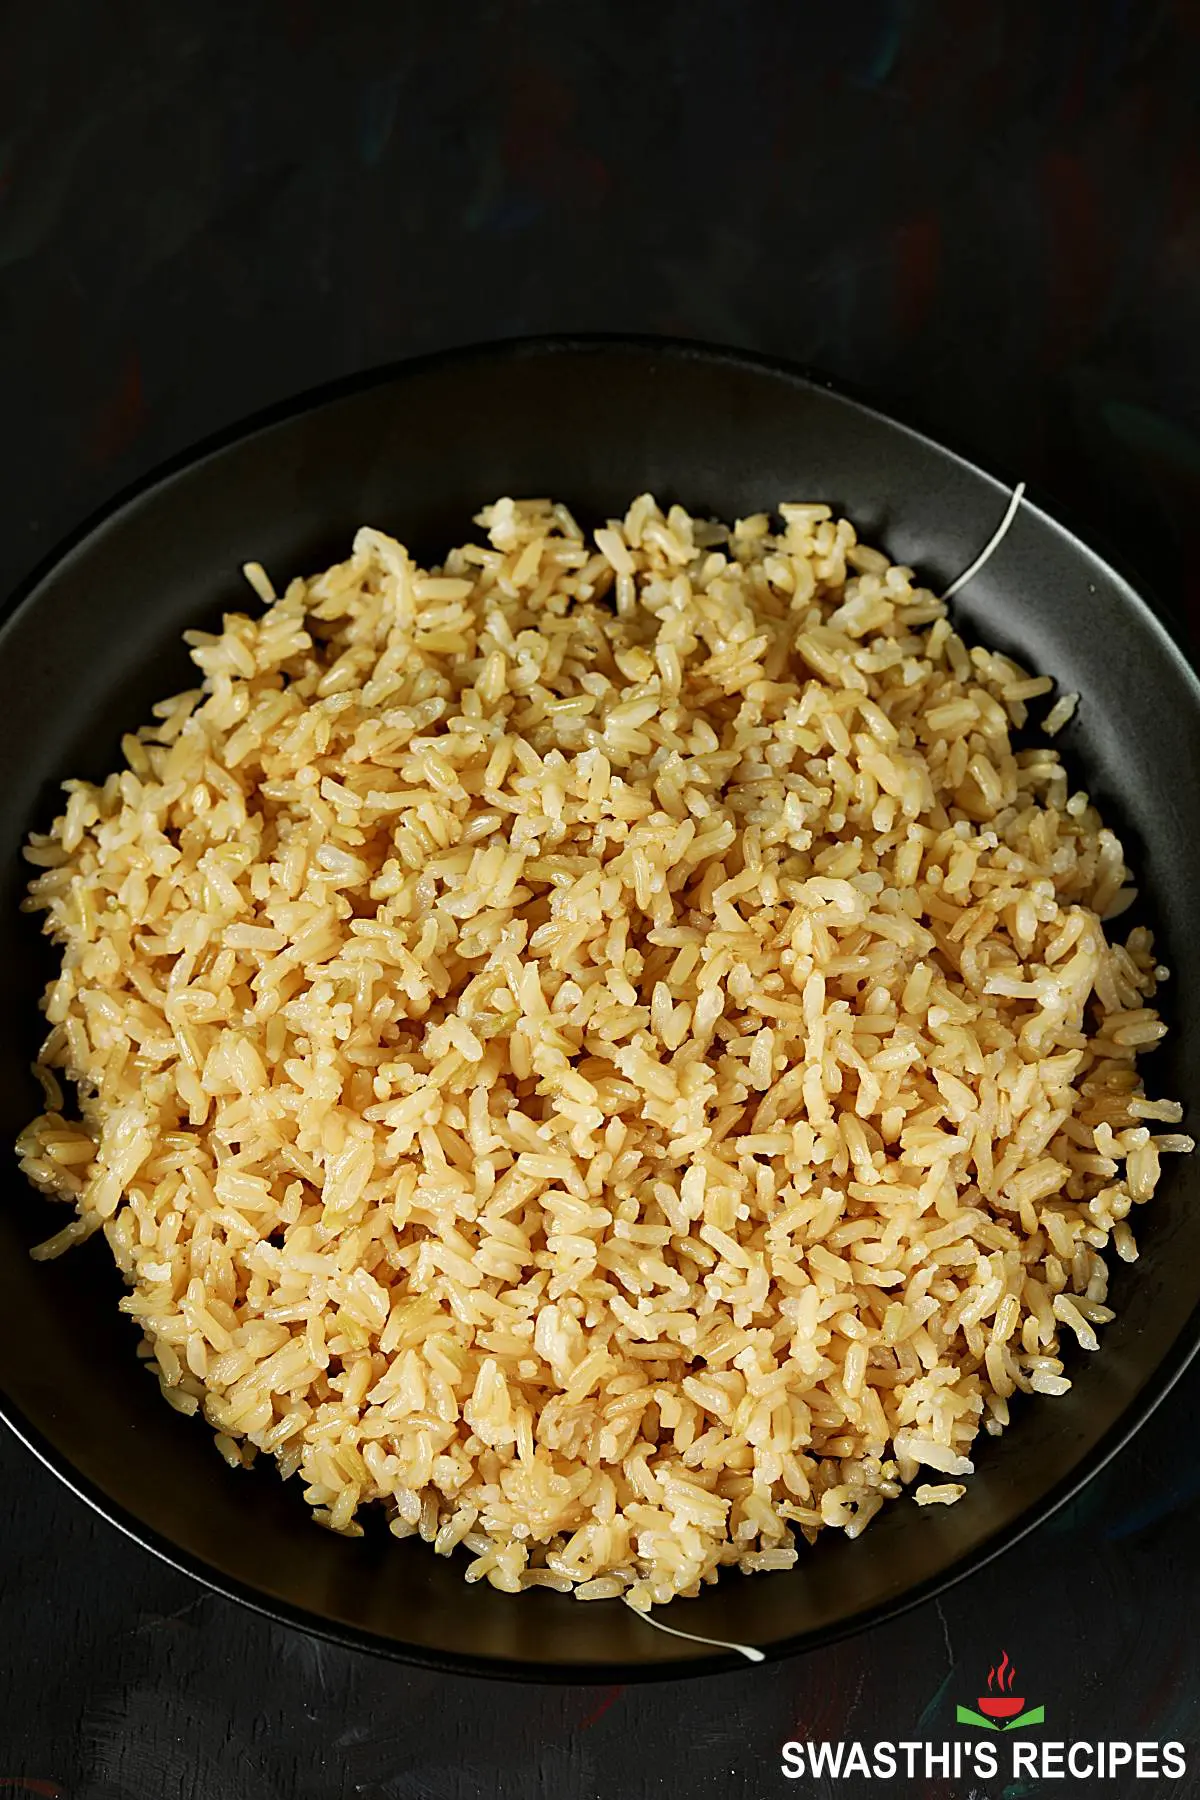 https://www.indianhealthyrecipes.com/wp-content/uploads/2022/10/instant-pot-brown-rice-recipe.jpg.webp